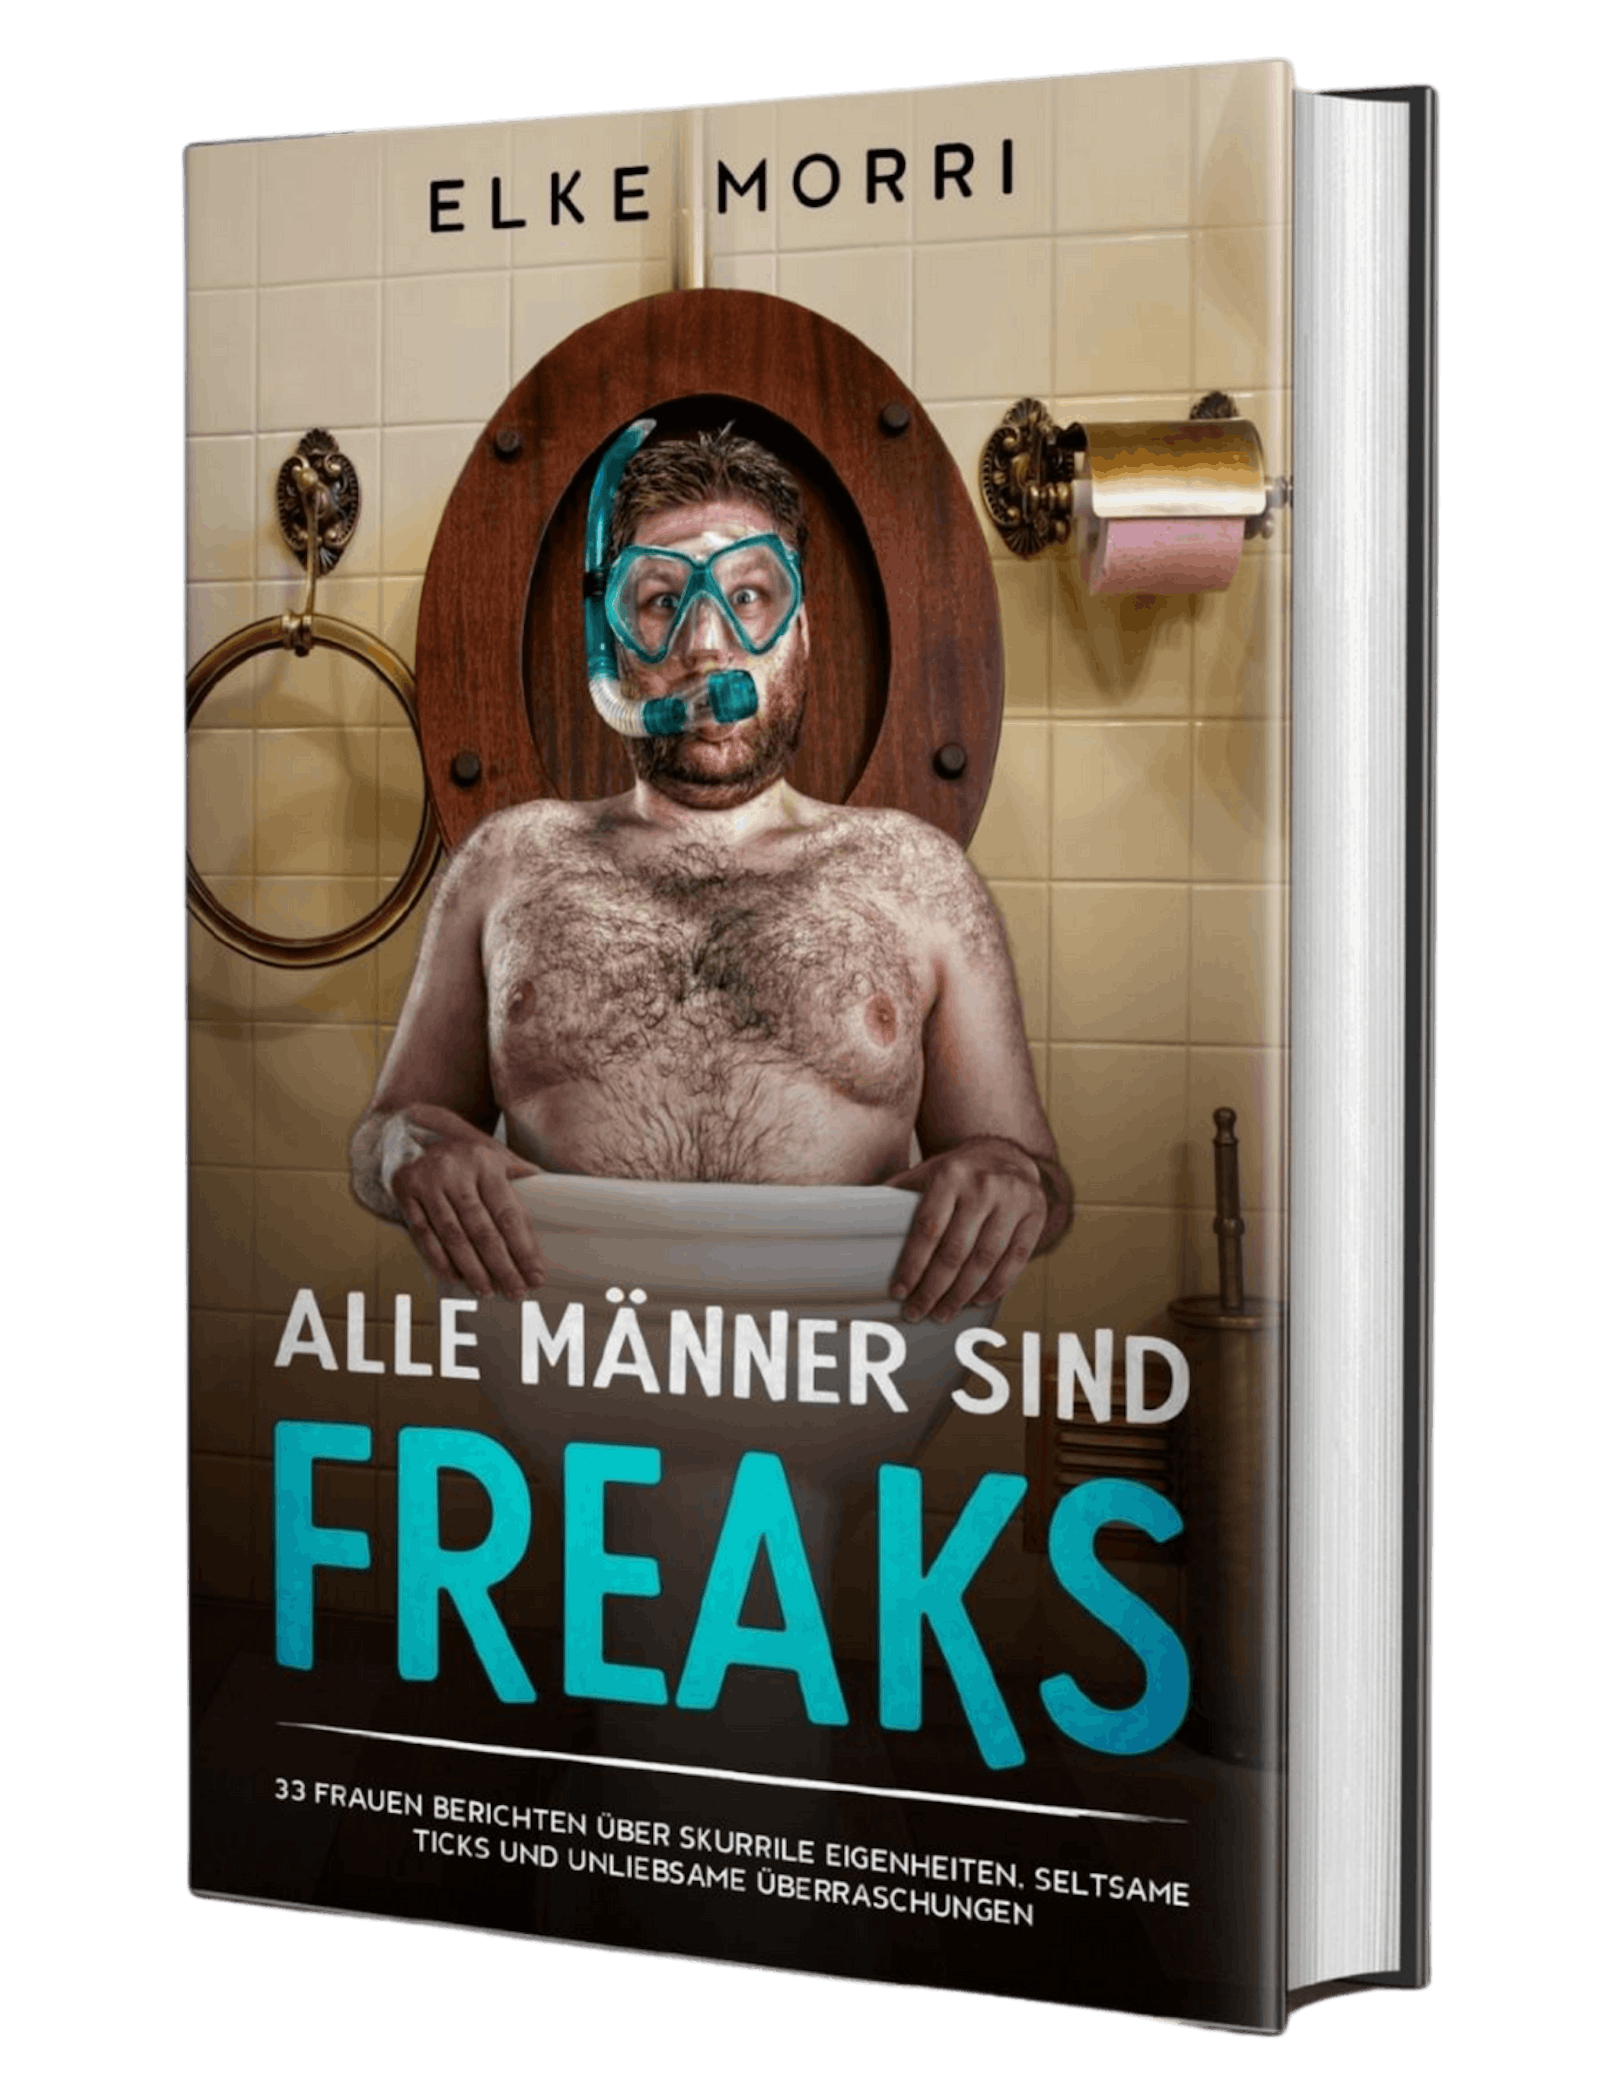 "Alle Männer sind Freaks" von Elke Morri (9,81 Euro auf <a href="https://www.amazon.de/dp/B08P1RG55W/ref=tmm_pap_swatch_0?_encoding=UTF8&amp;qid=&amp;sr=">Amazon.de</a>)